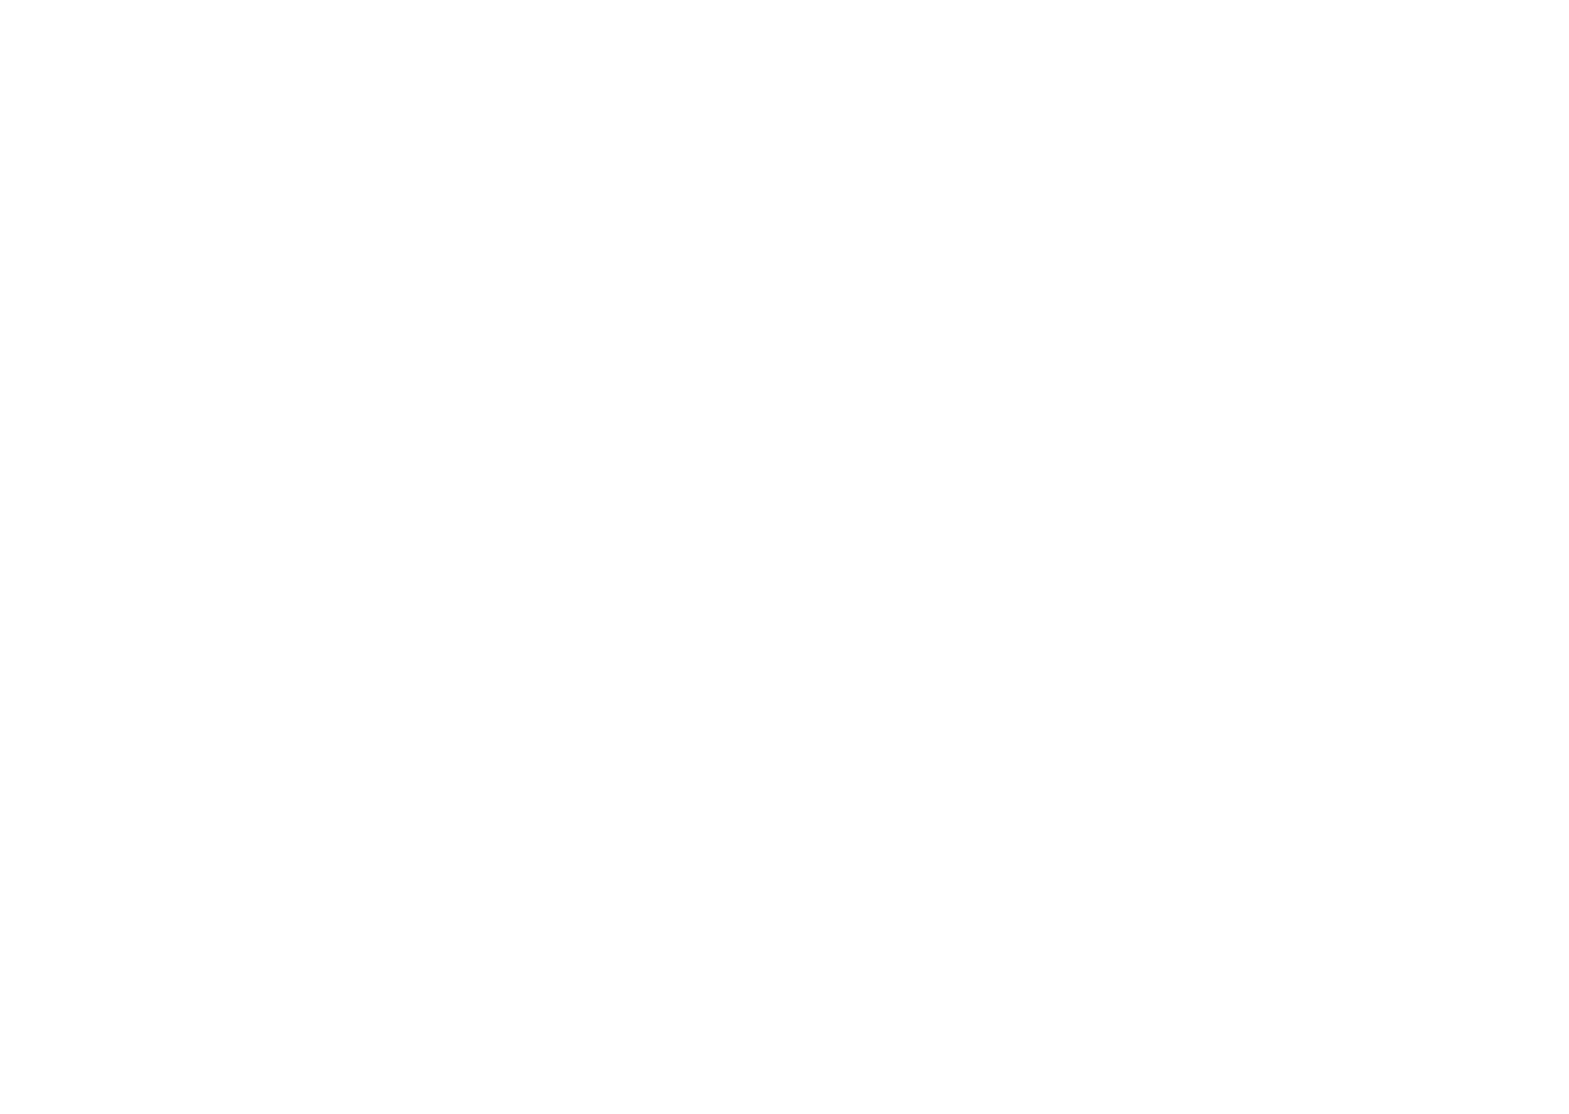 Yalla Group logo for dark backgrounds (transparent PNG)